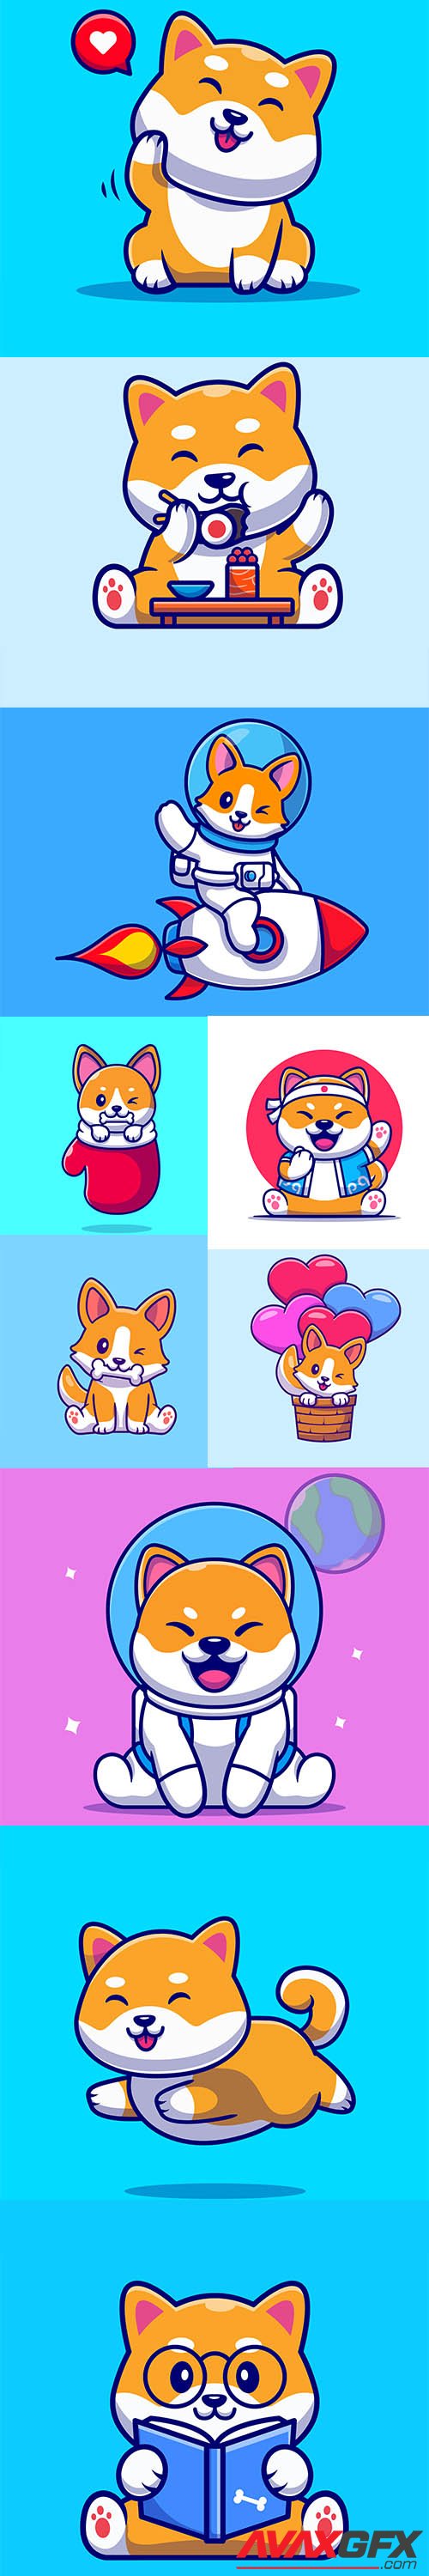 Cute shiba inu dog cartoon illustration set